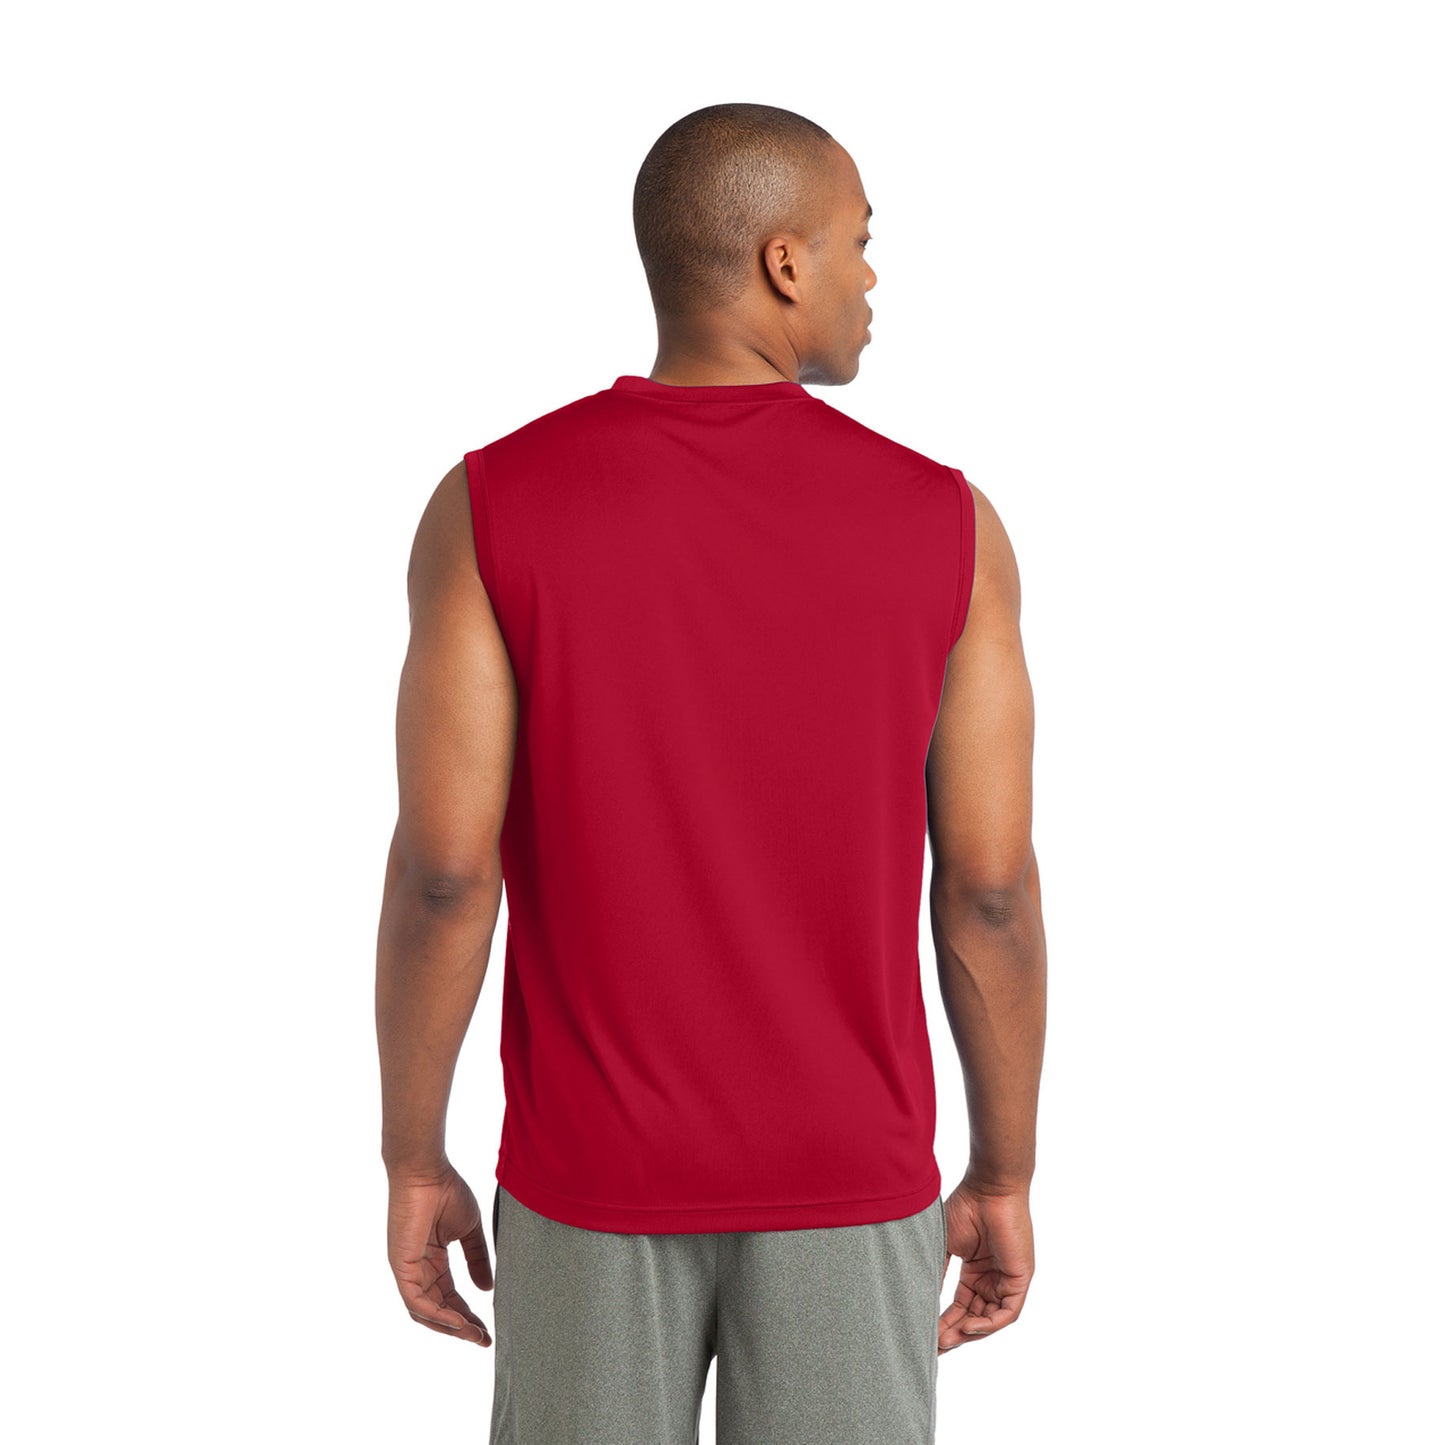 American Ninja Warrior Men's Red Sleeveless Performance Shirt